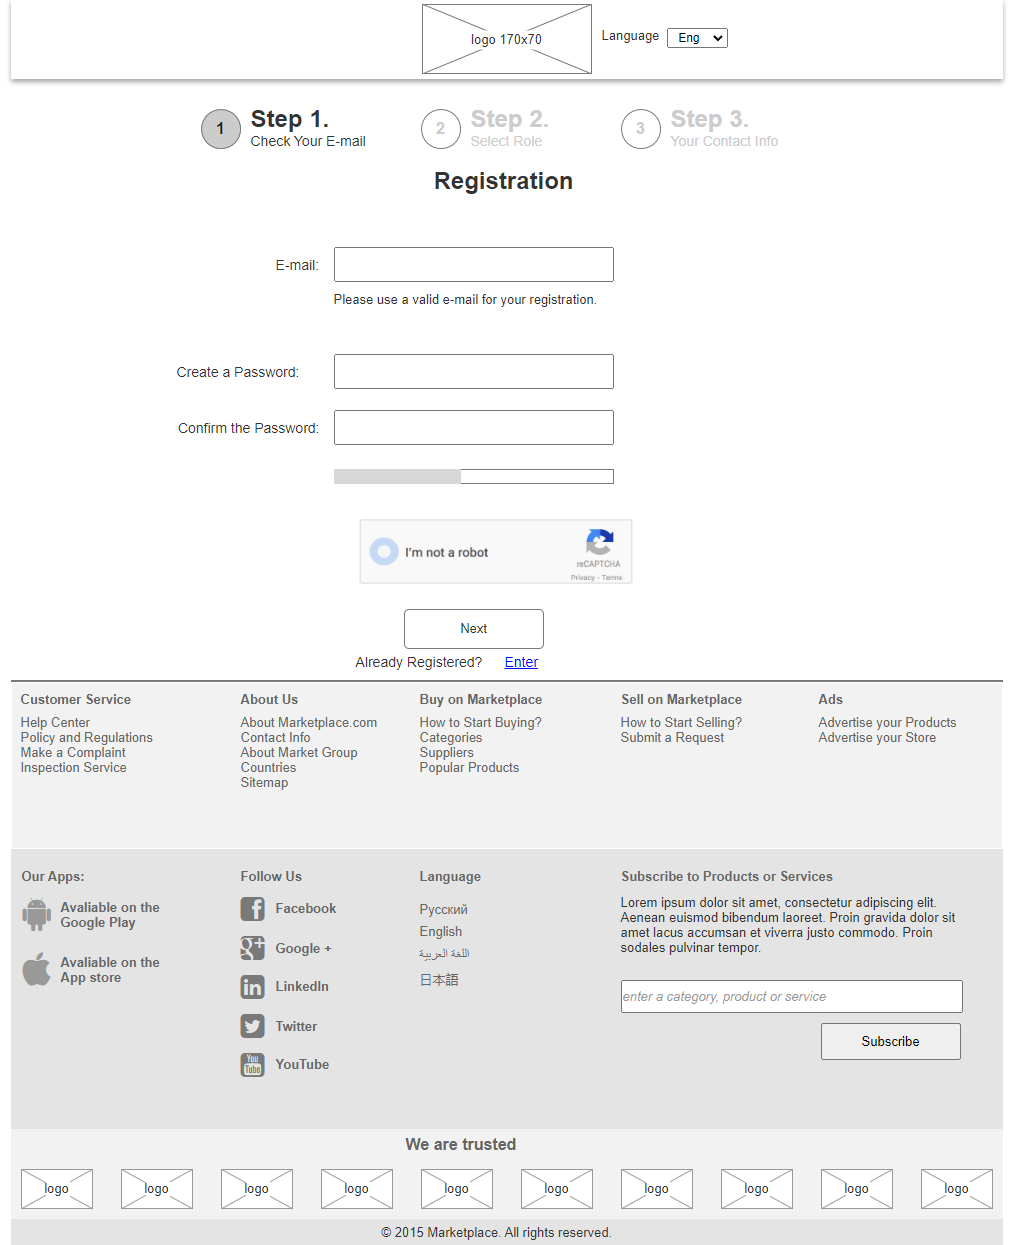 Page: Registration. Step 1